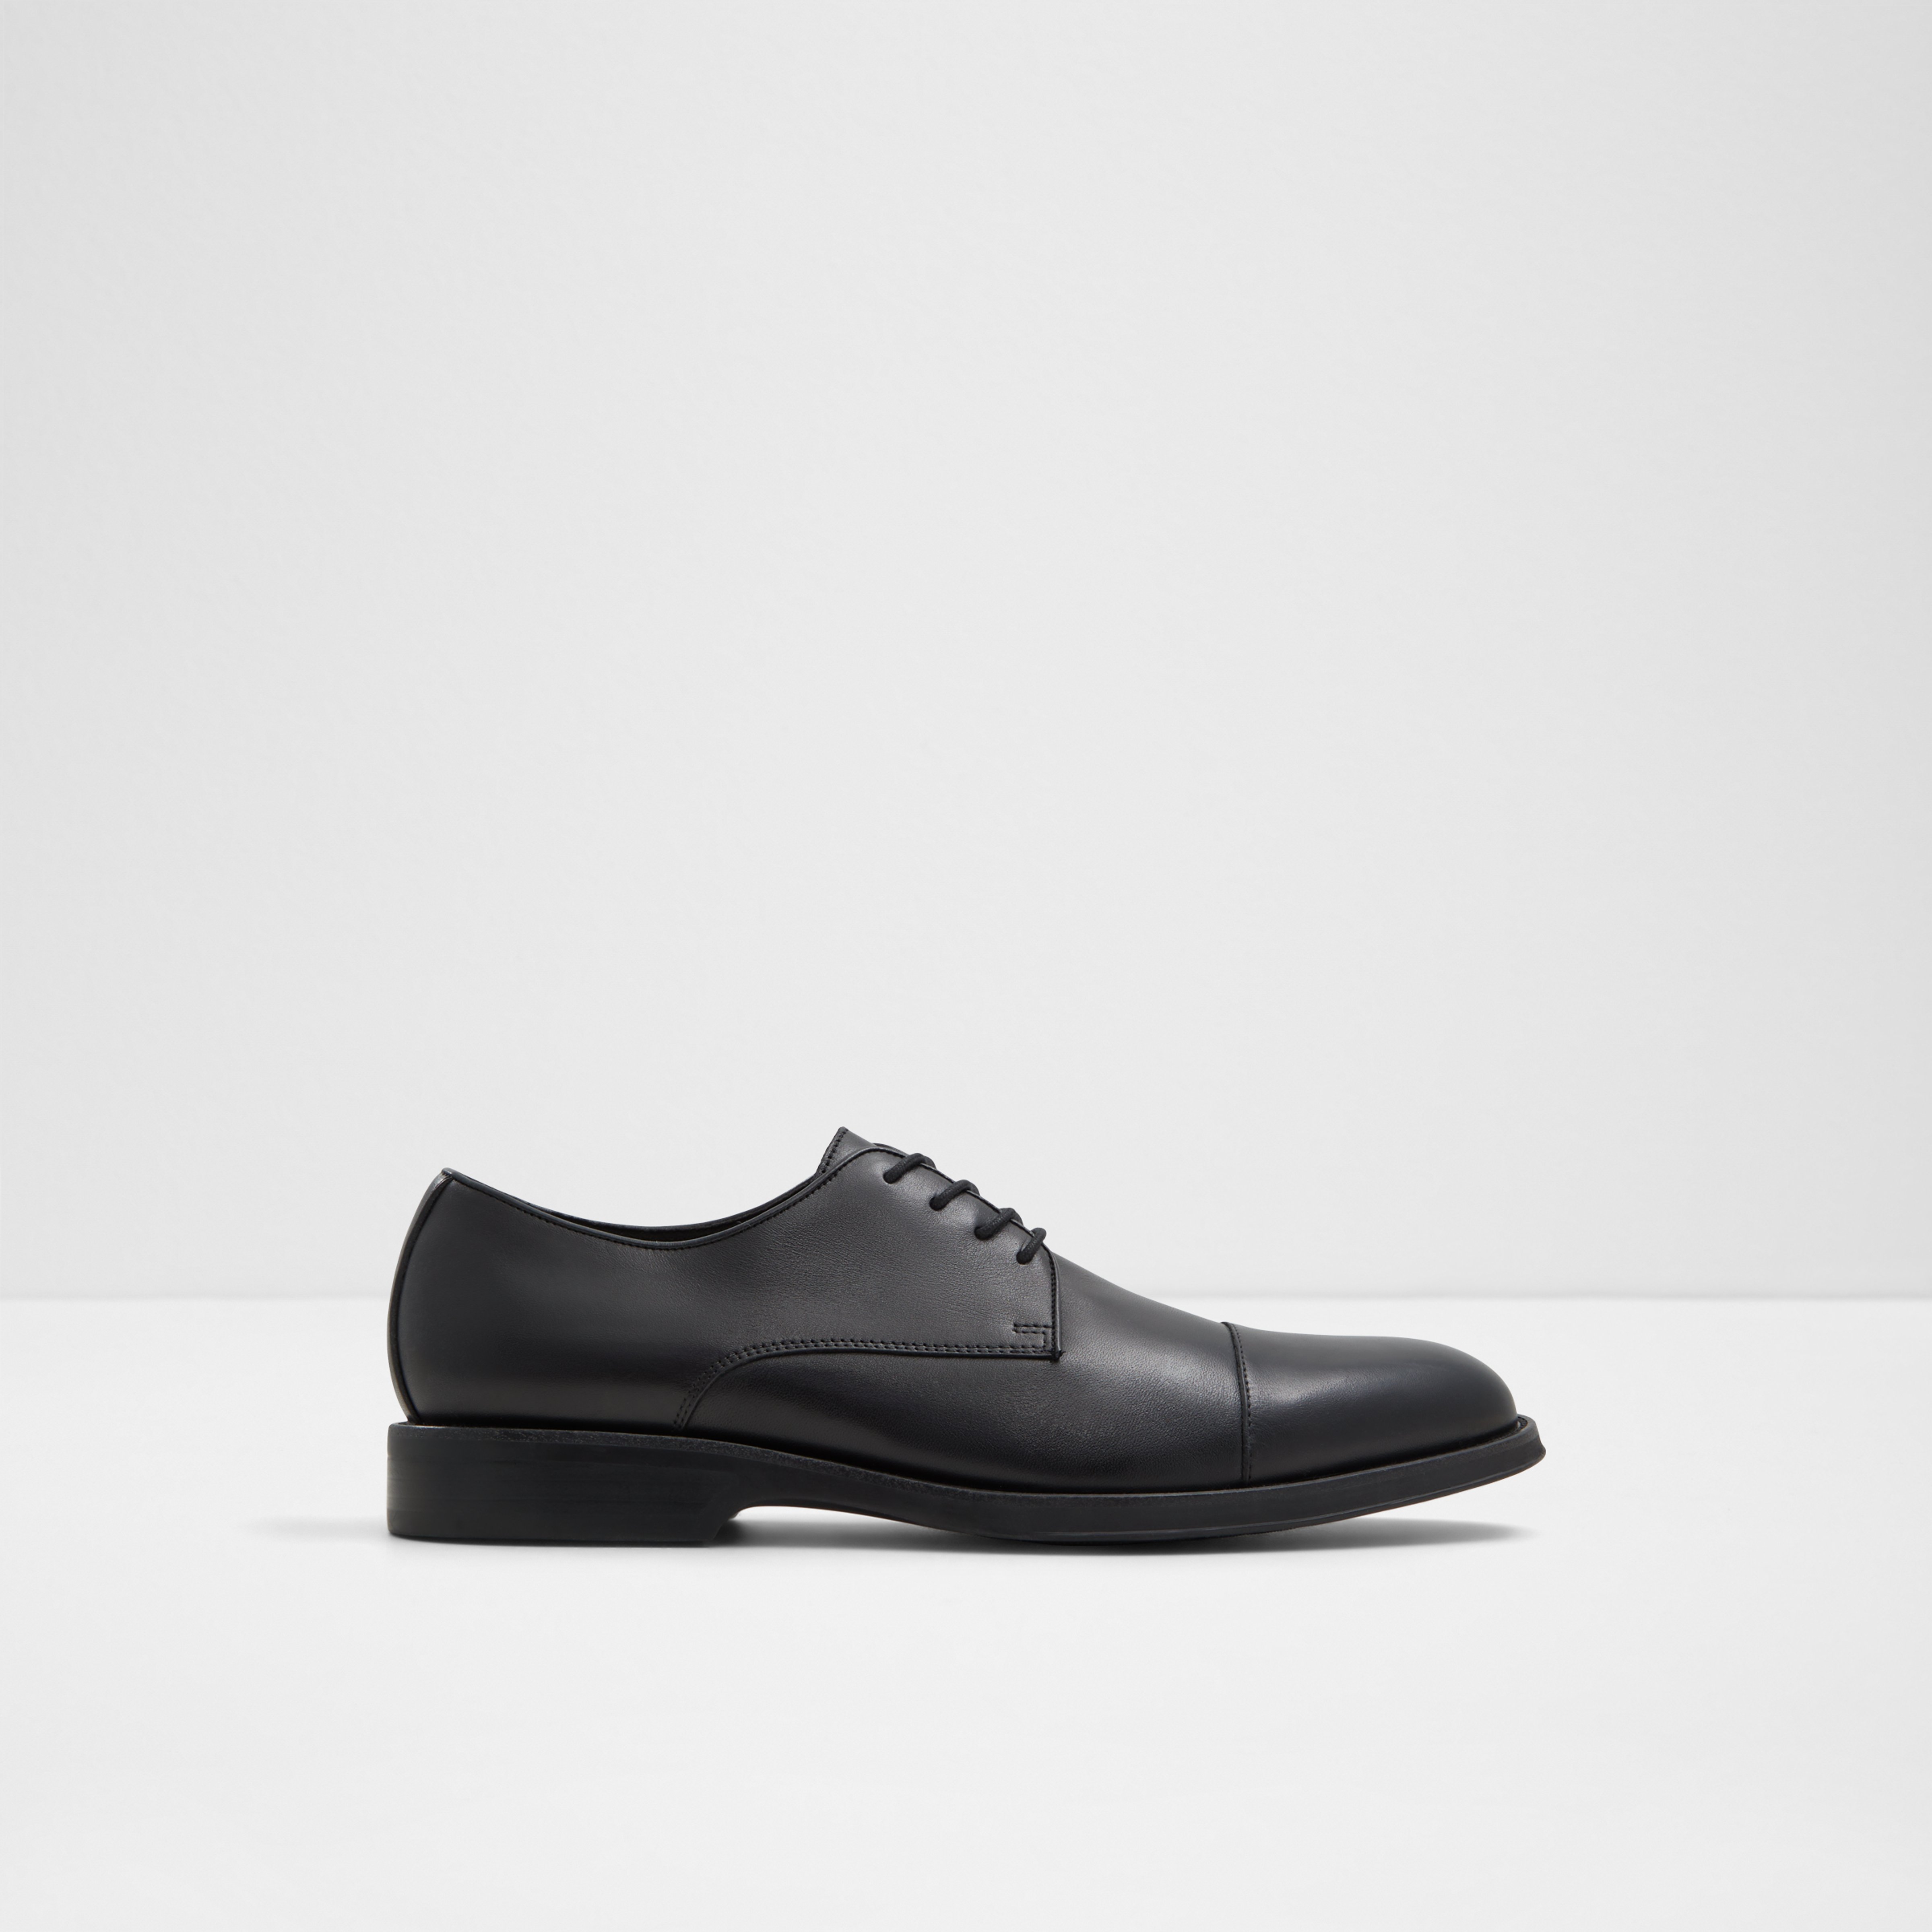 Aldo Shoes Hanks - Men's